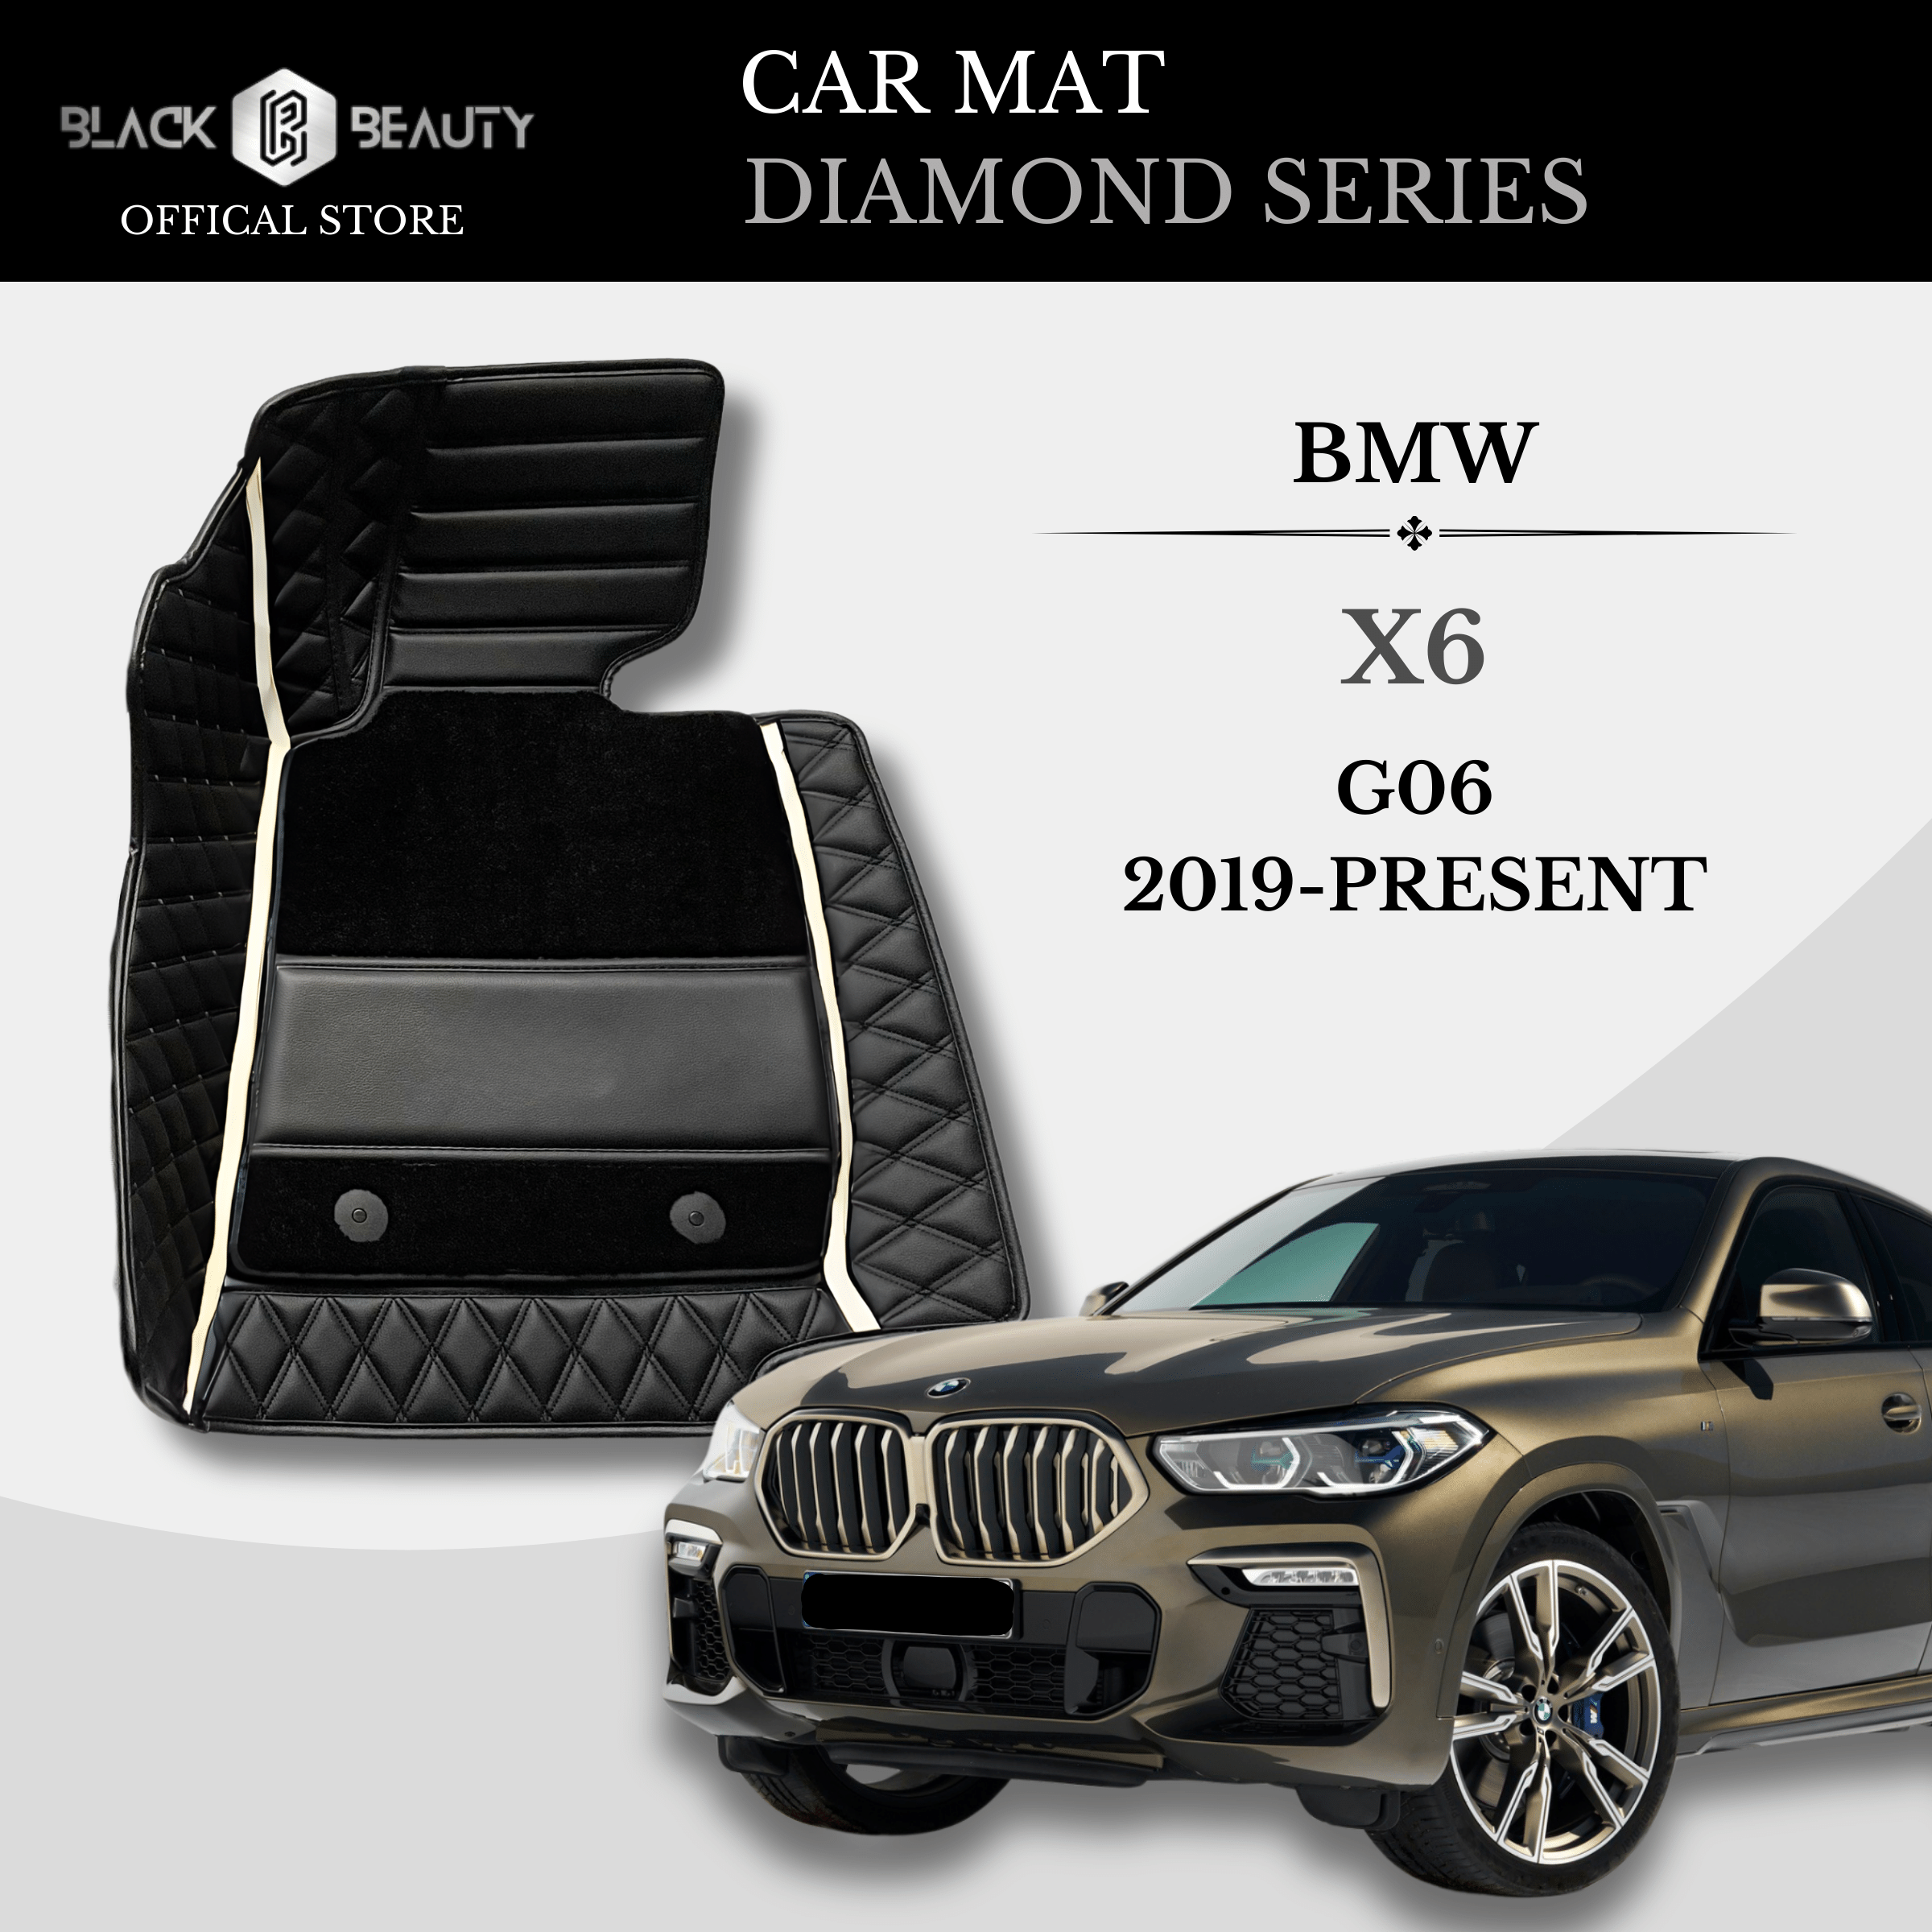 BMW X6 G06 (2019-Present) - Diamond Series Car Mat